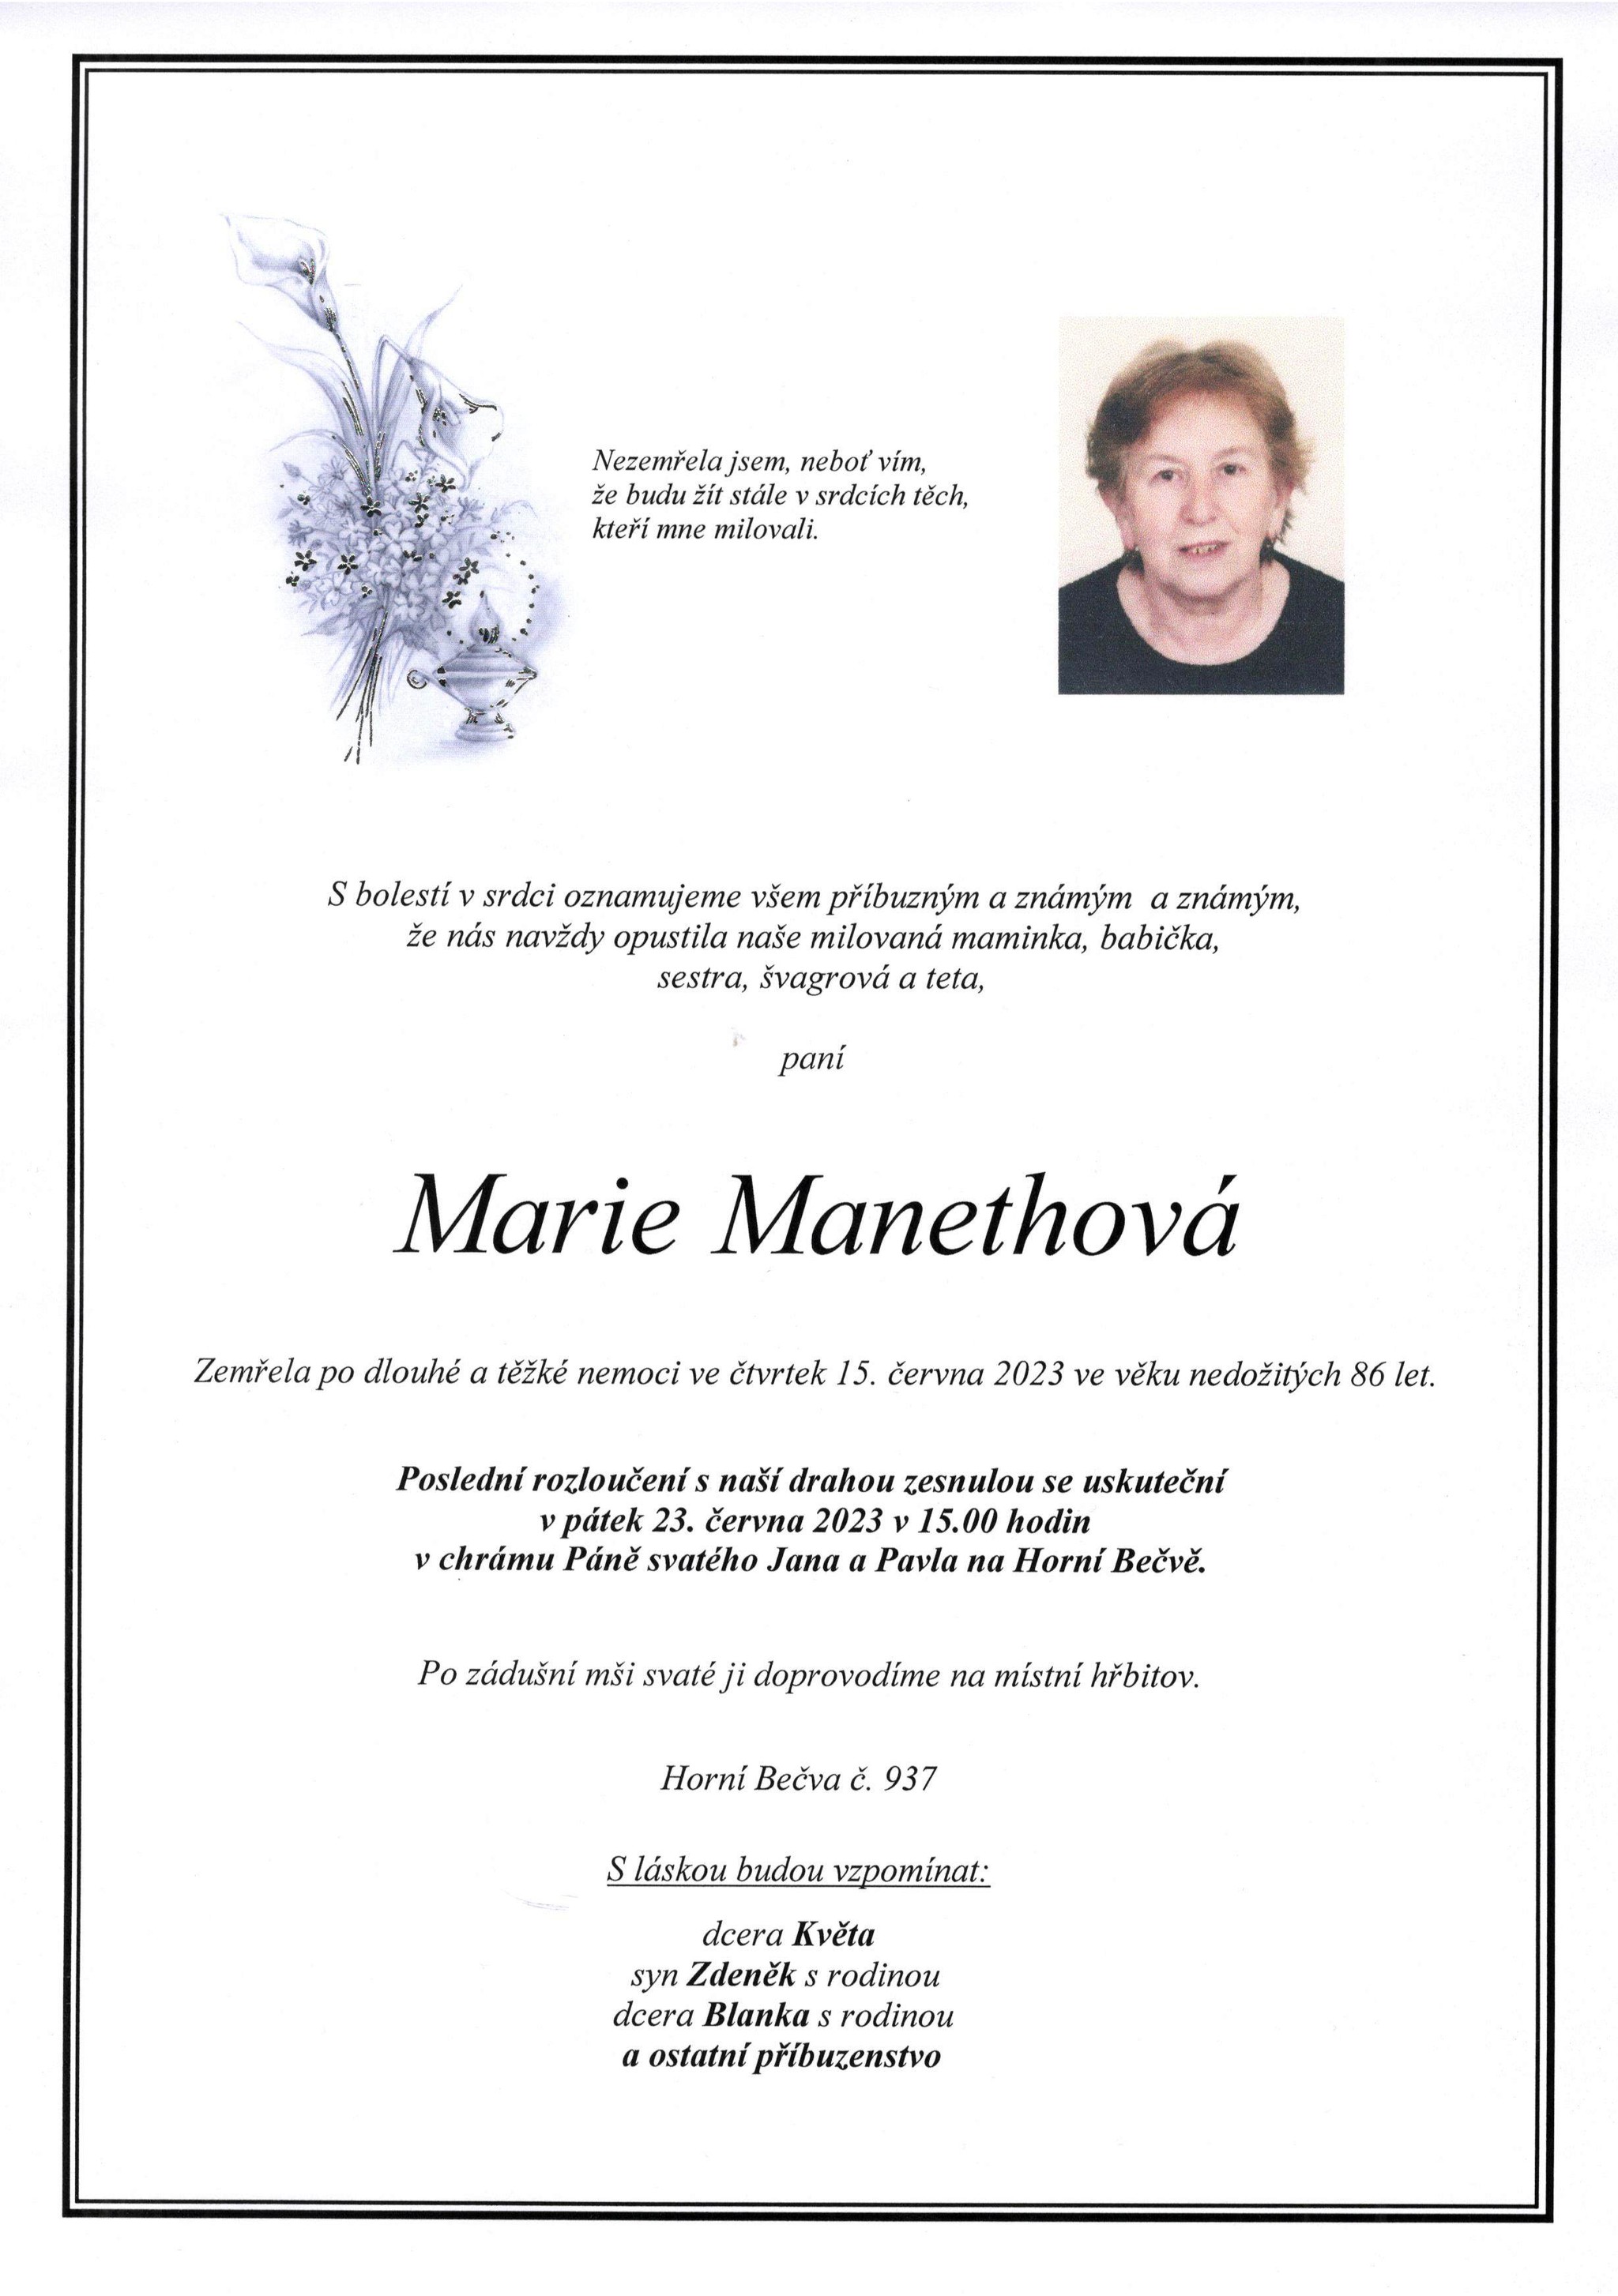 Marie Manethová